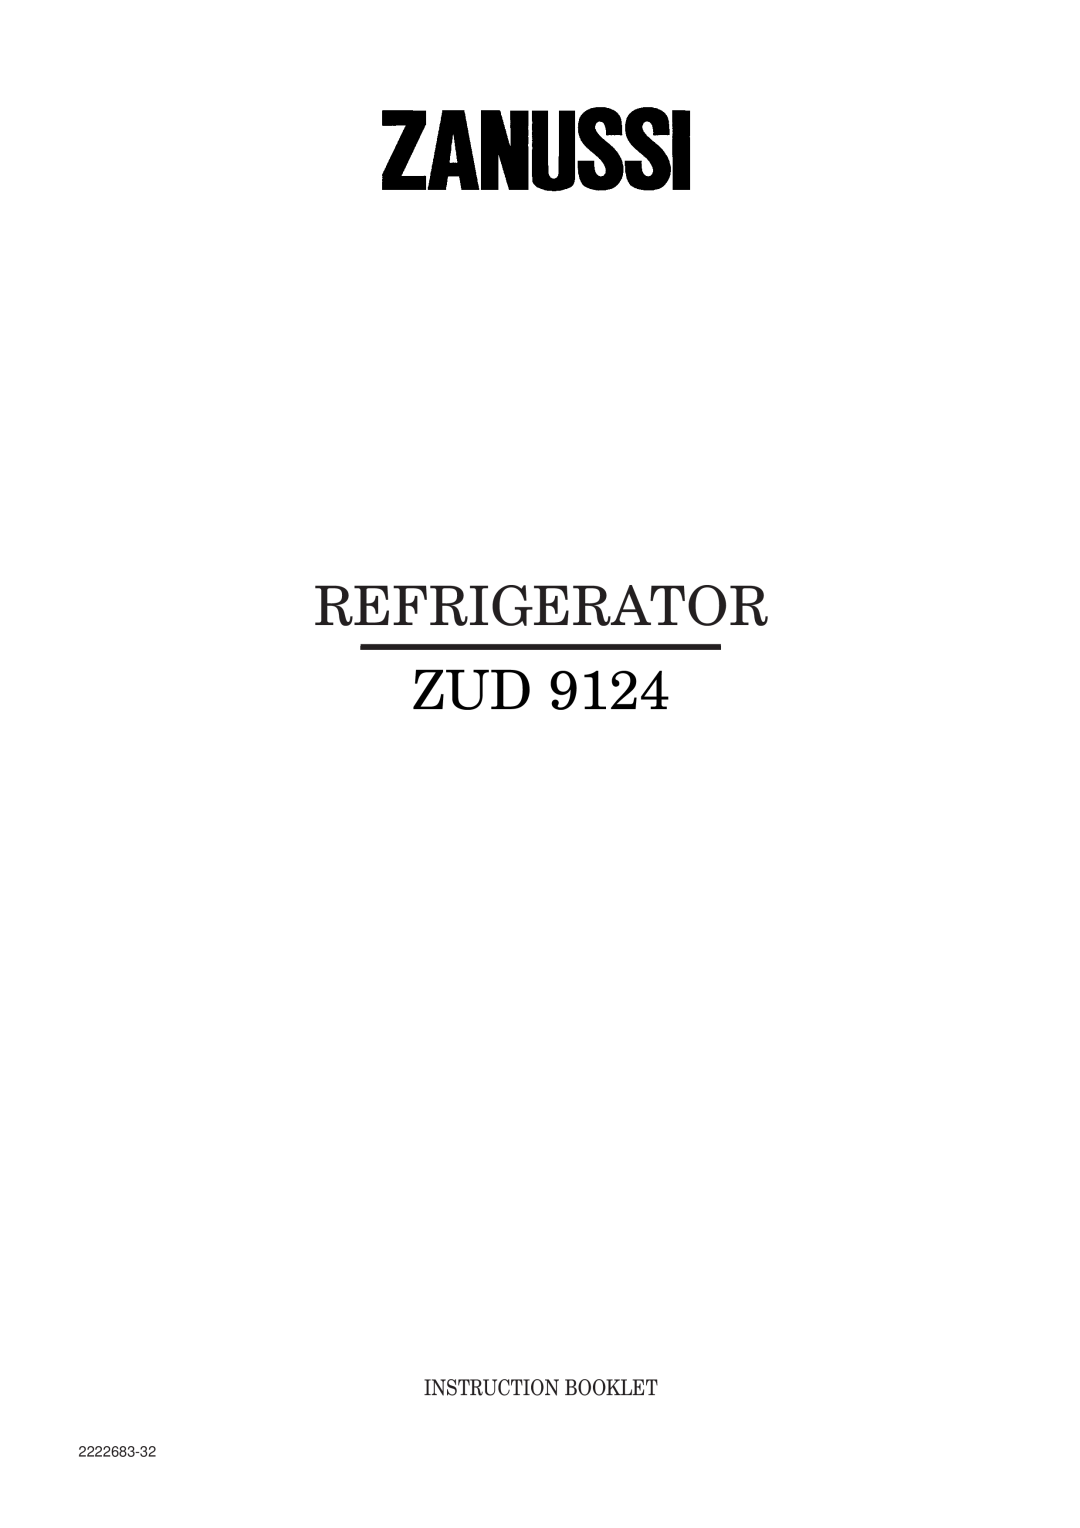 Zanussi ZUD 9124 manual Refrigerator, Instruction Booklet, 2222683-32 